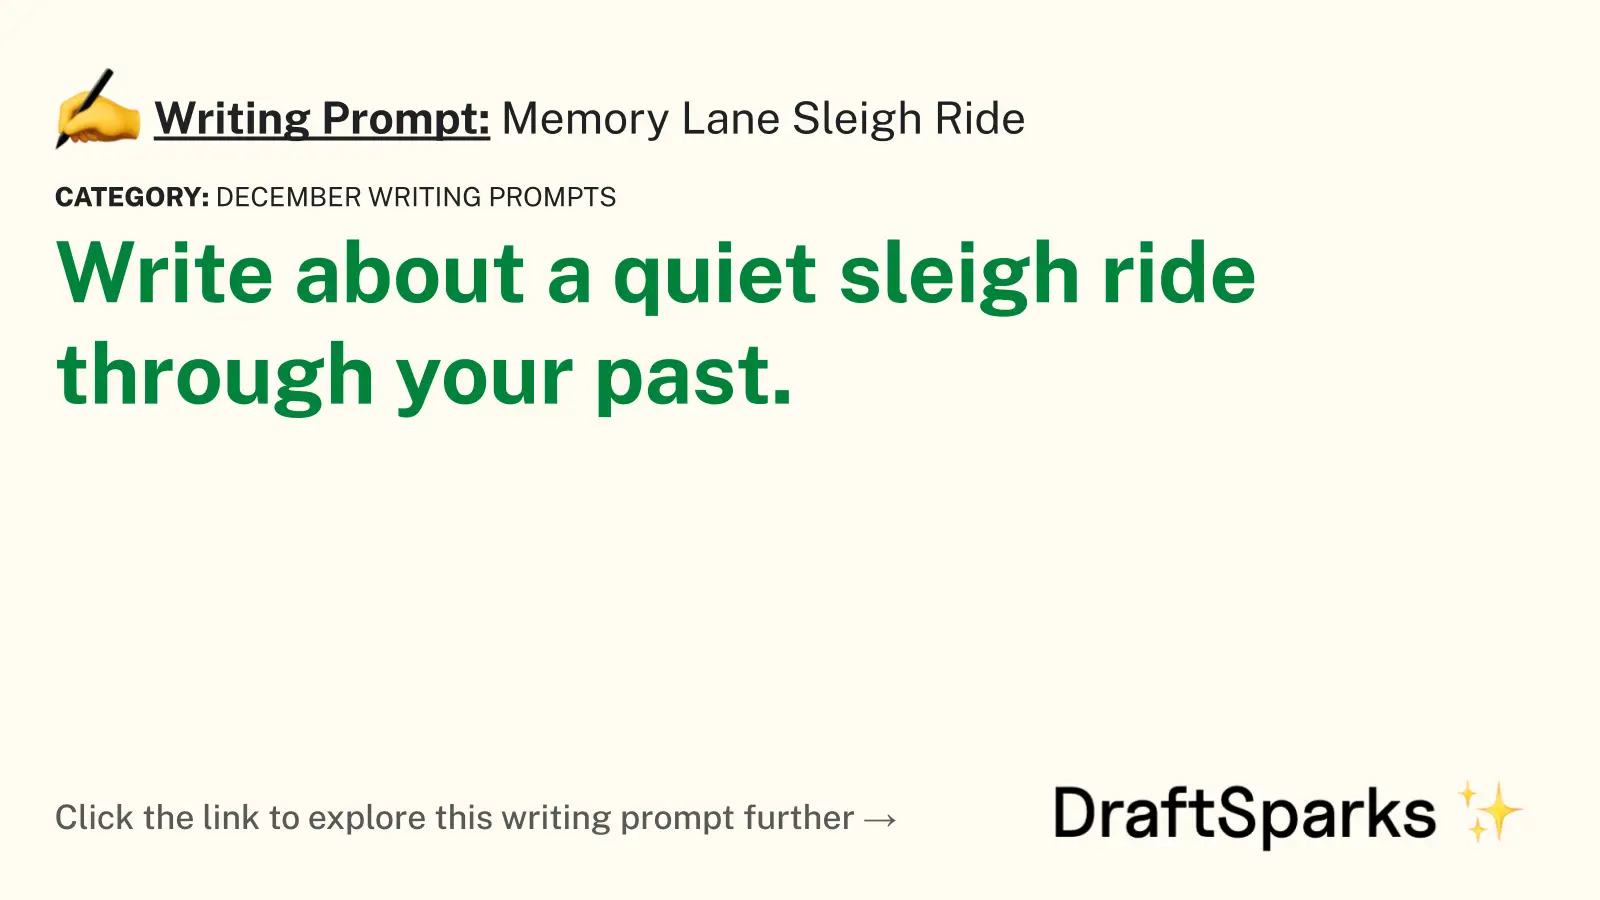 Memory Lane Sleigh Ride